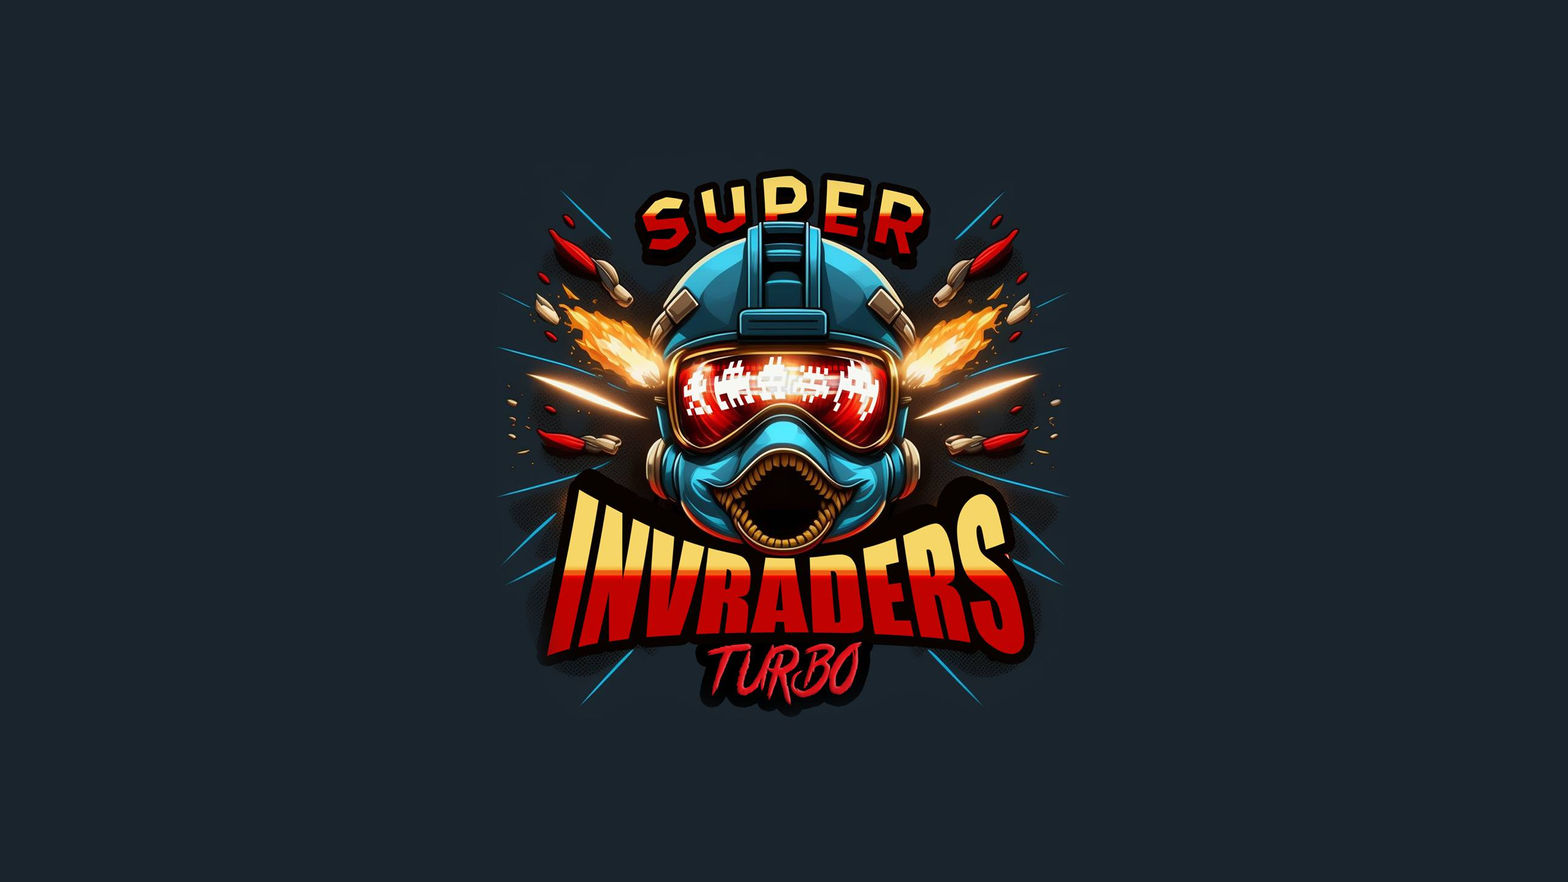 Super InVRaders Turbo